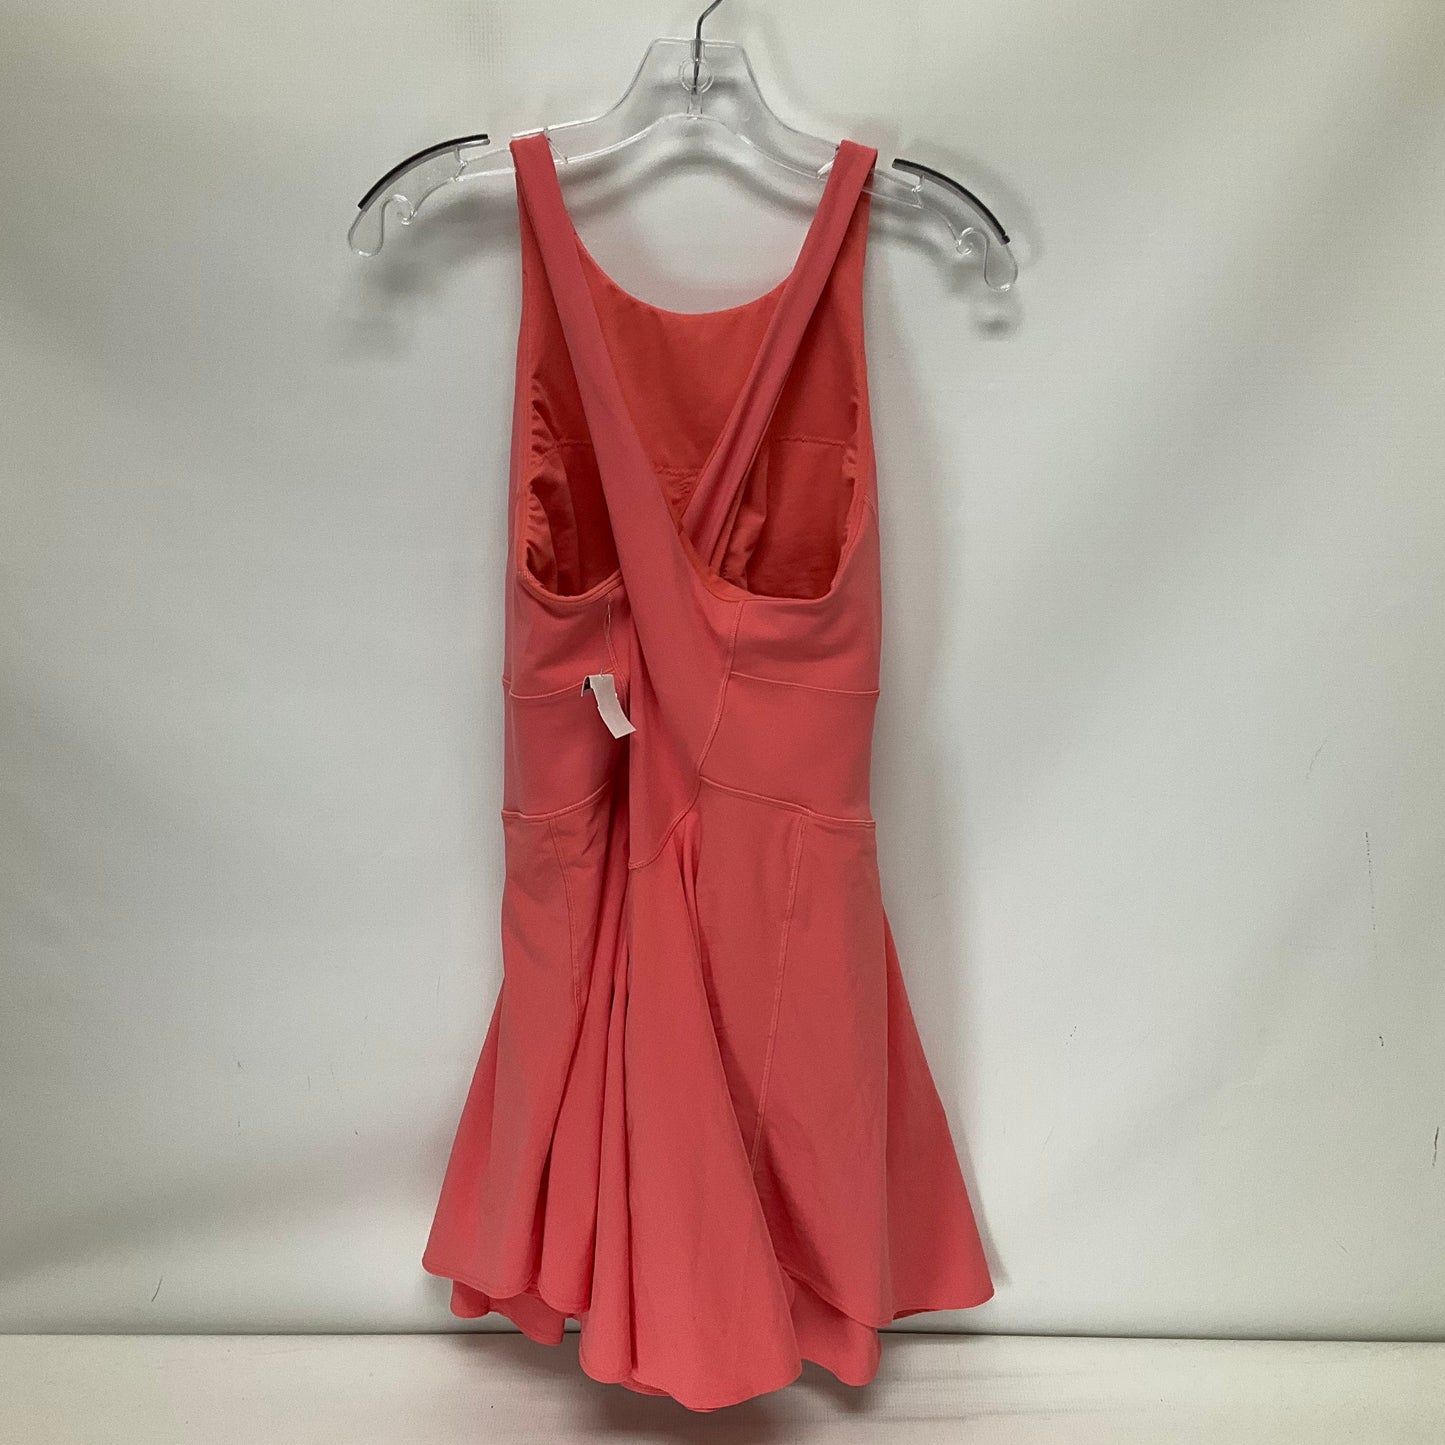 Coral Athletic Dress Lululemon, Size 12